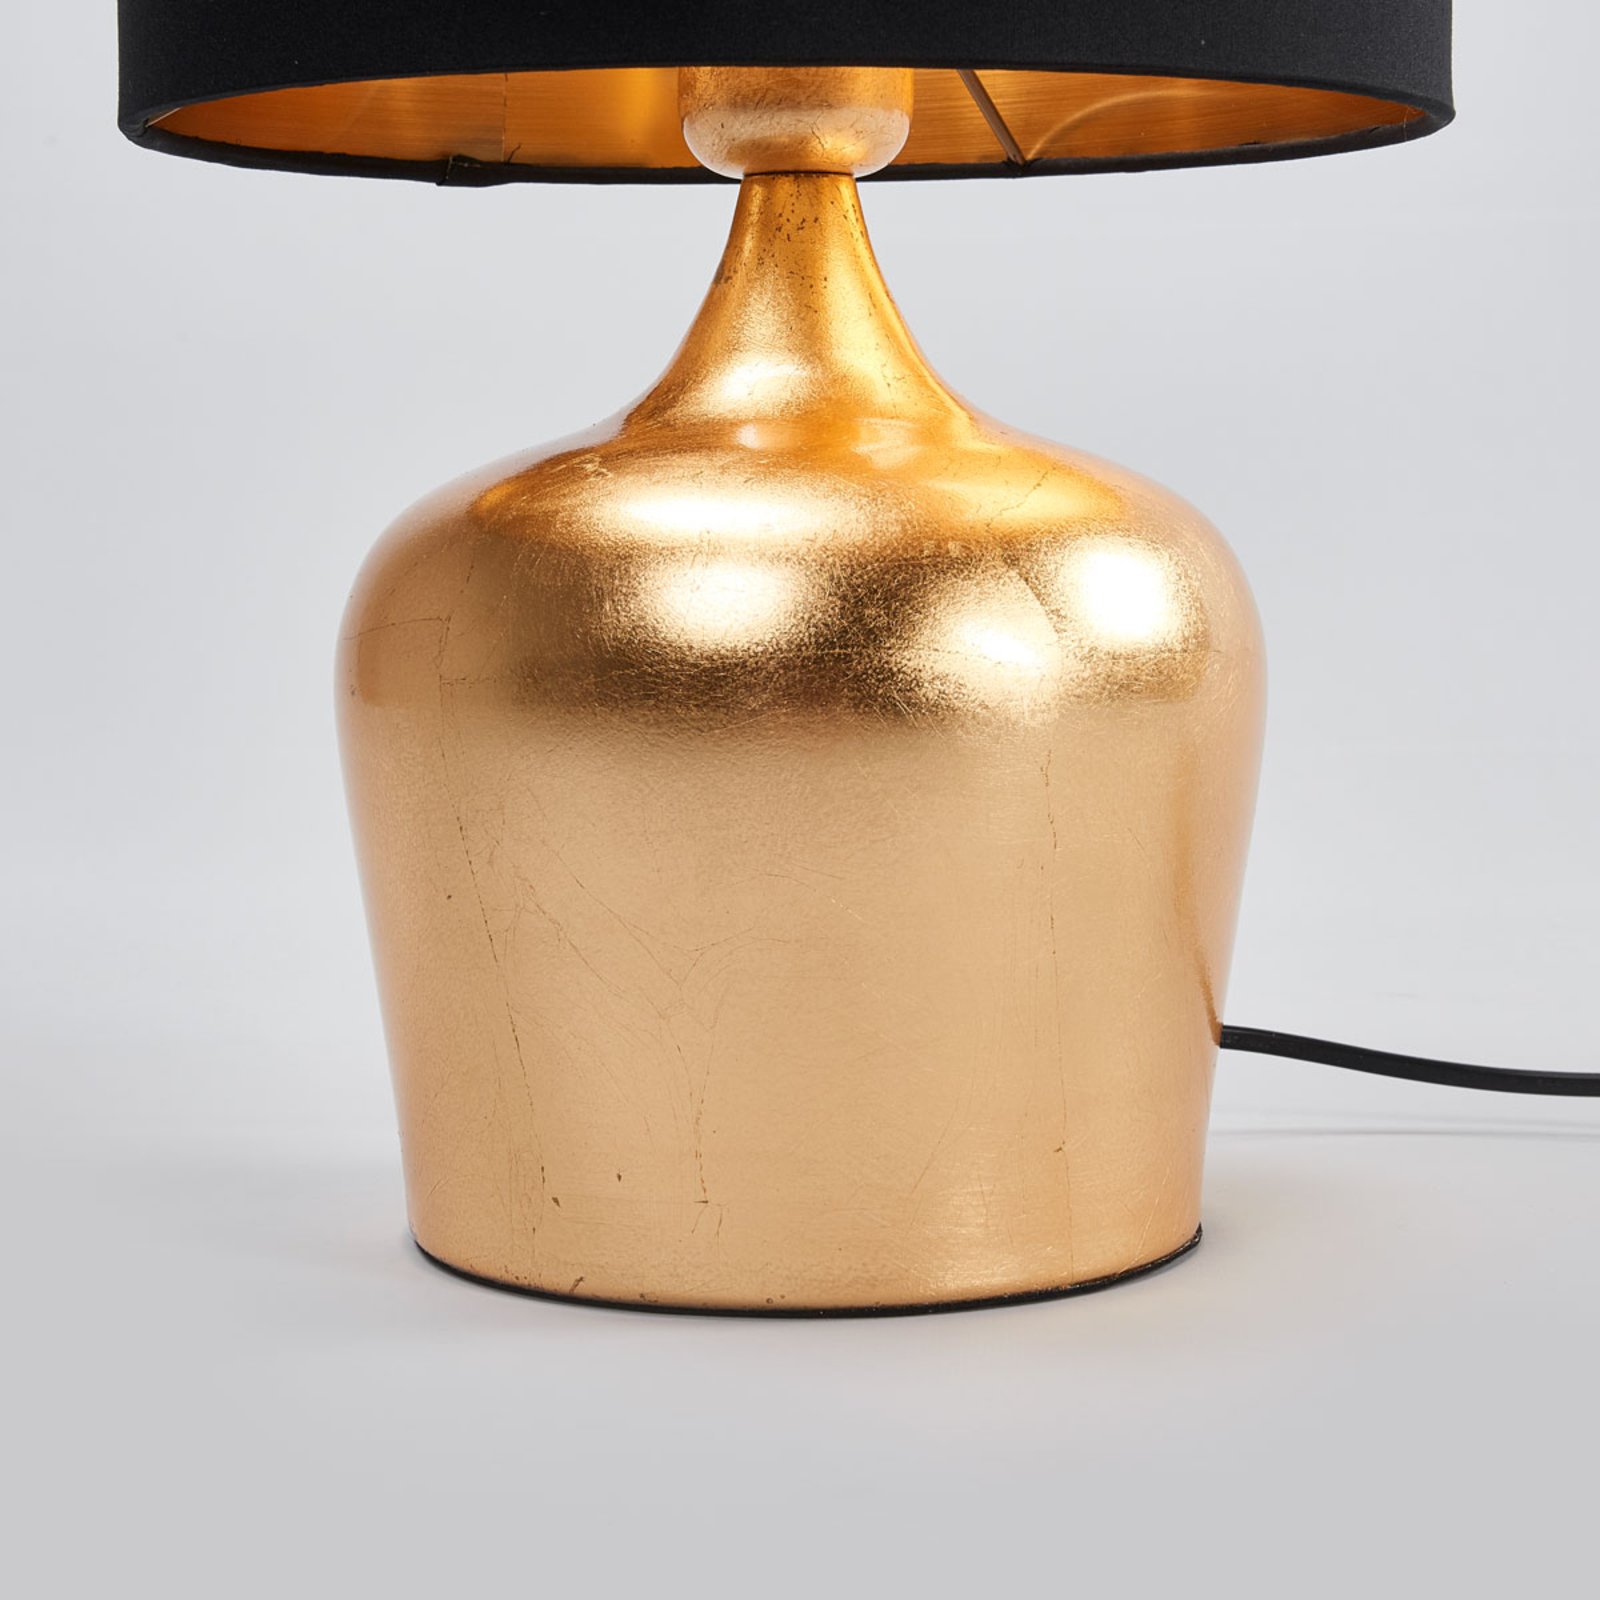 Graceful Manalba table lamp